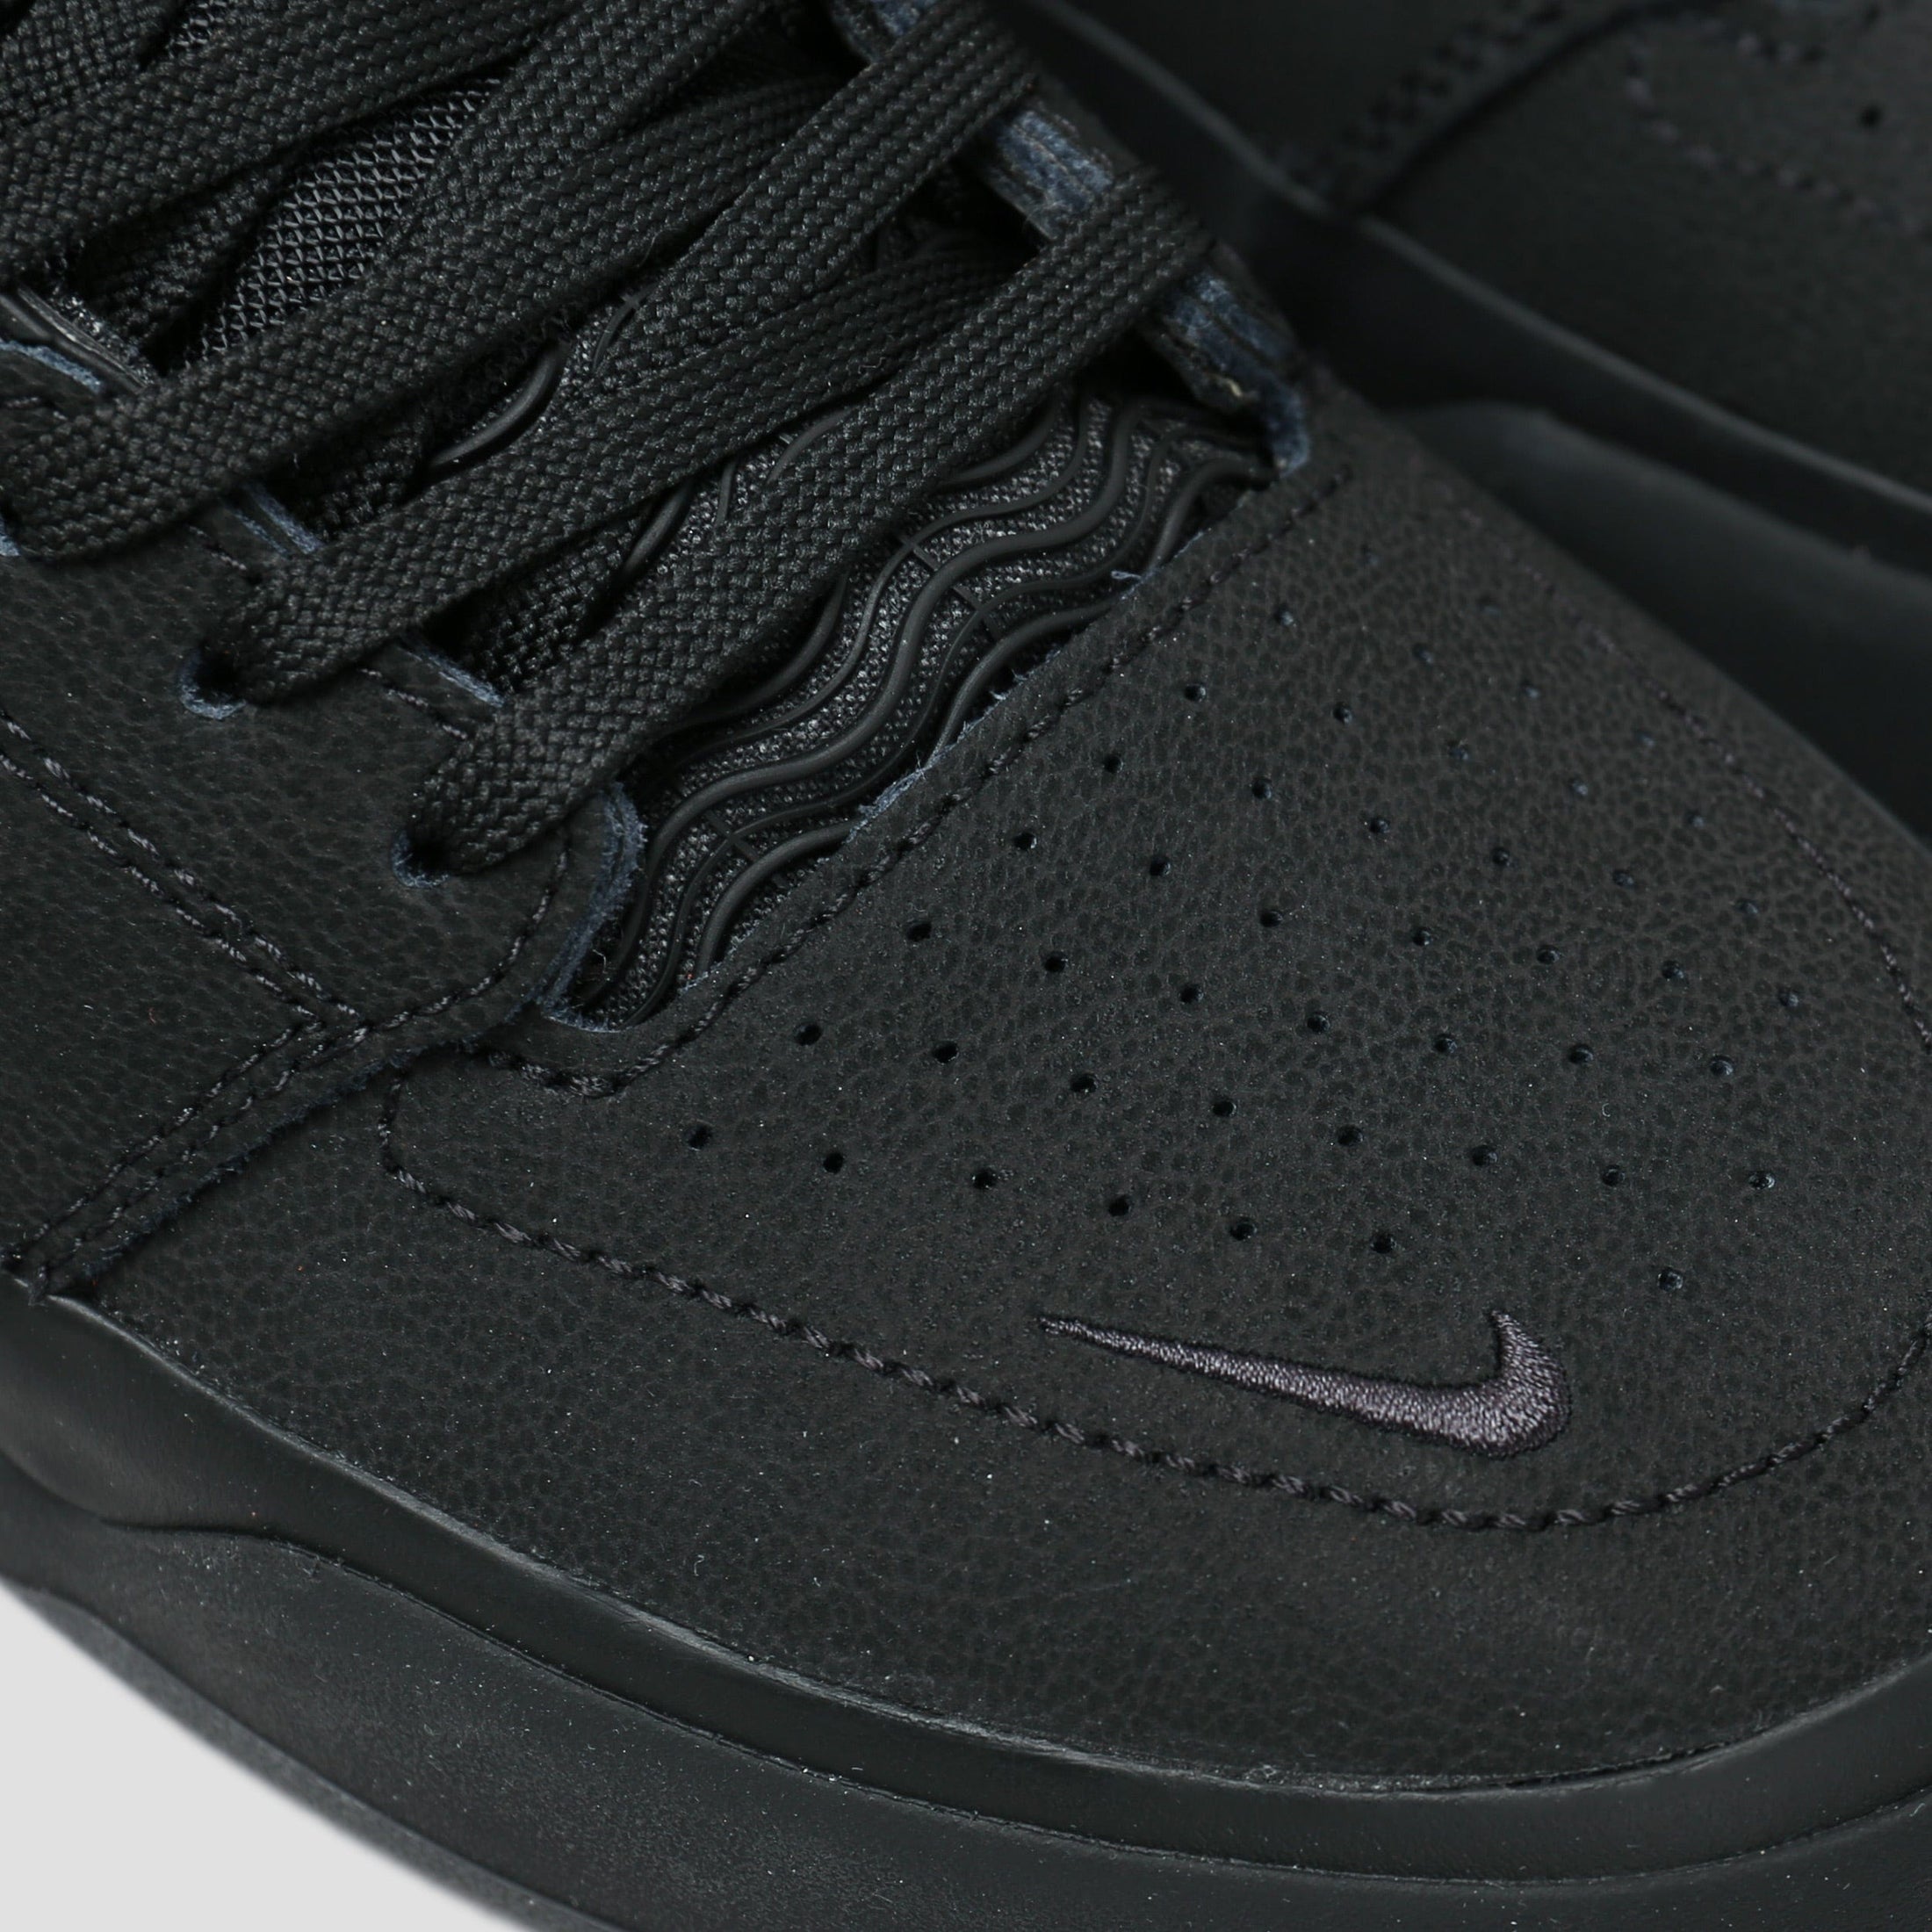 Nike SB Ishod Premium Shoes Black/Black